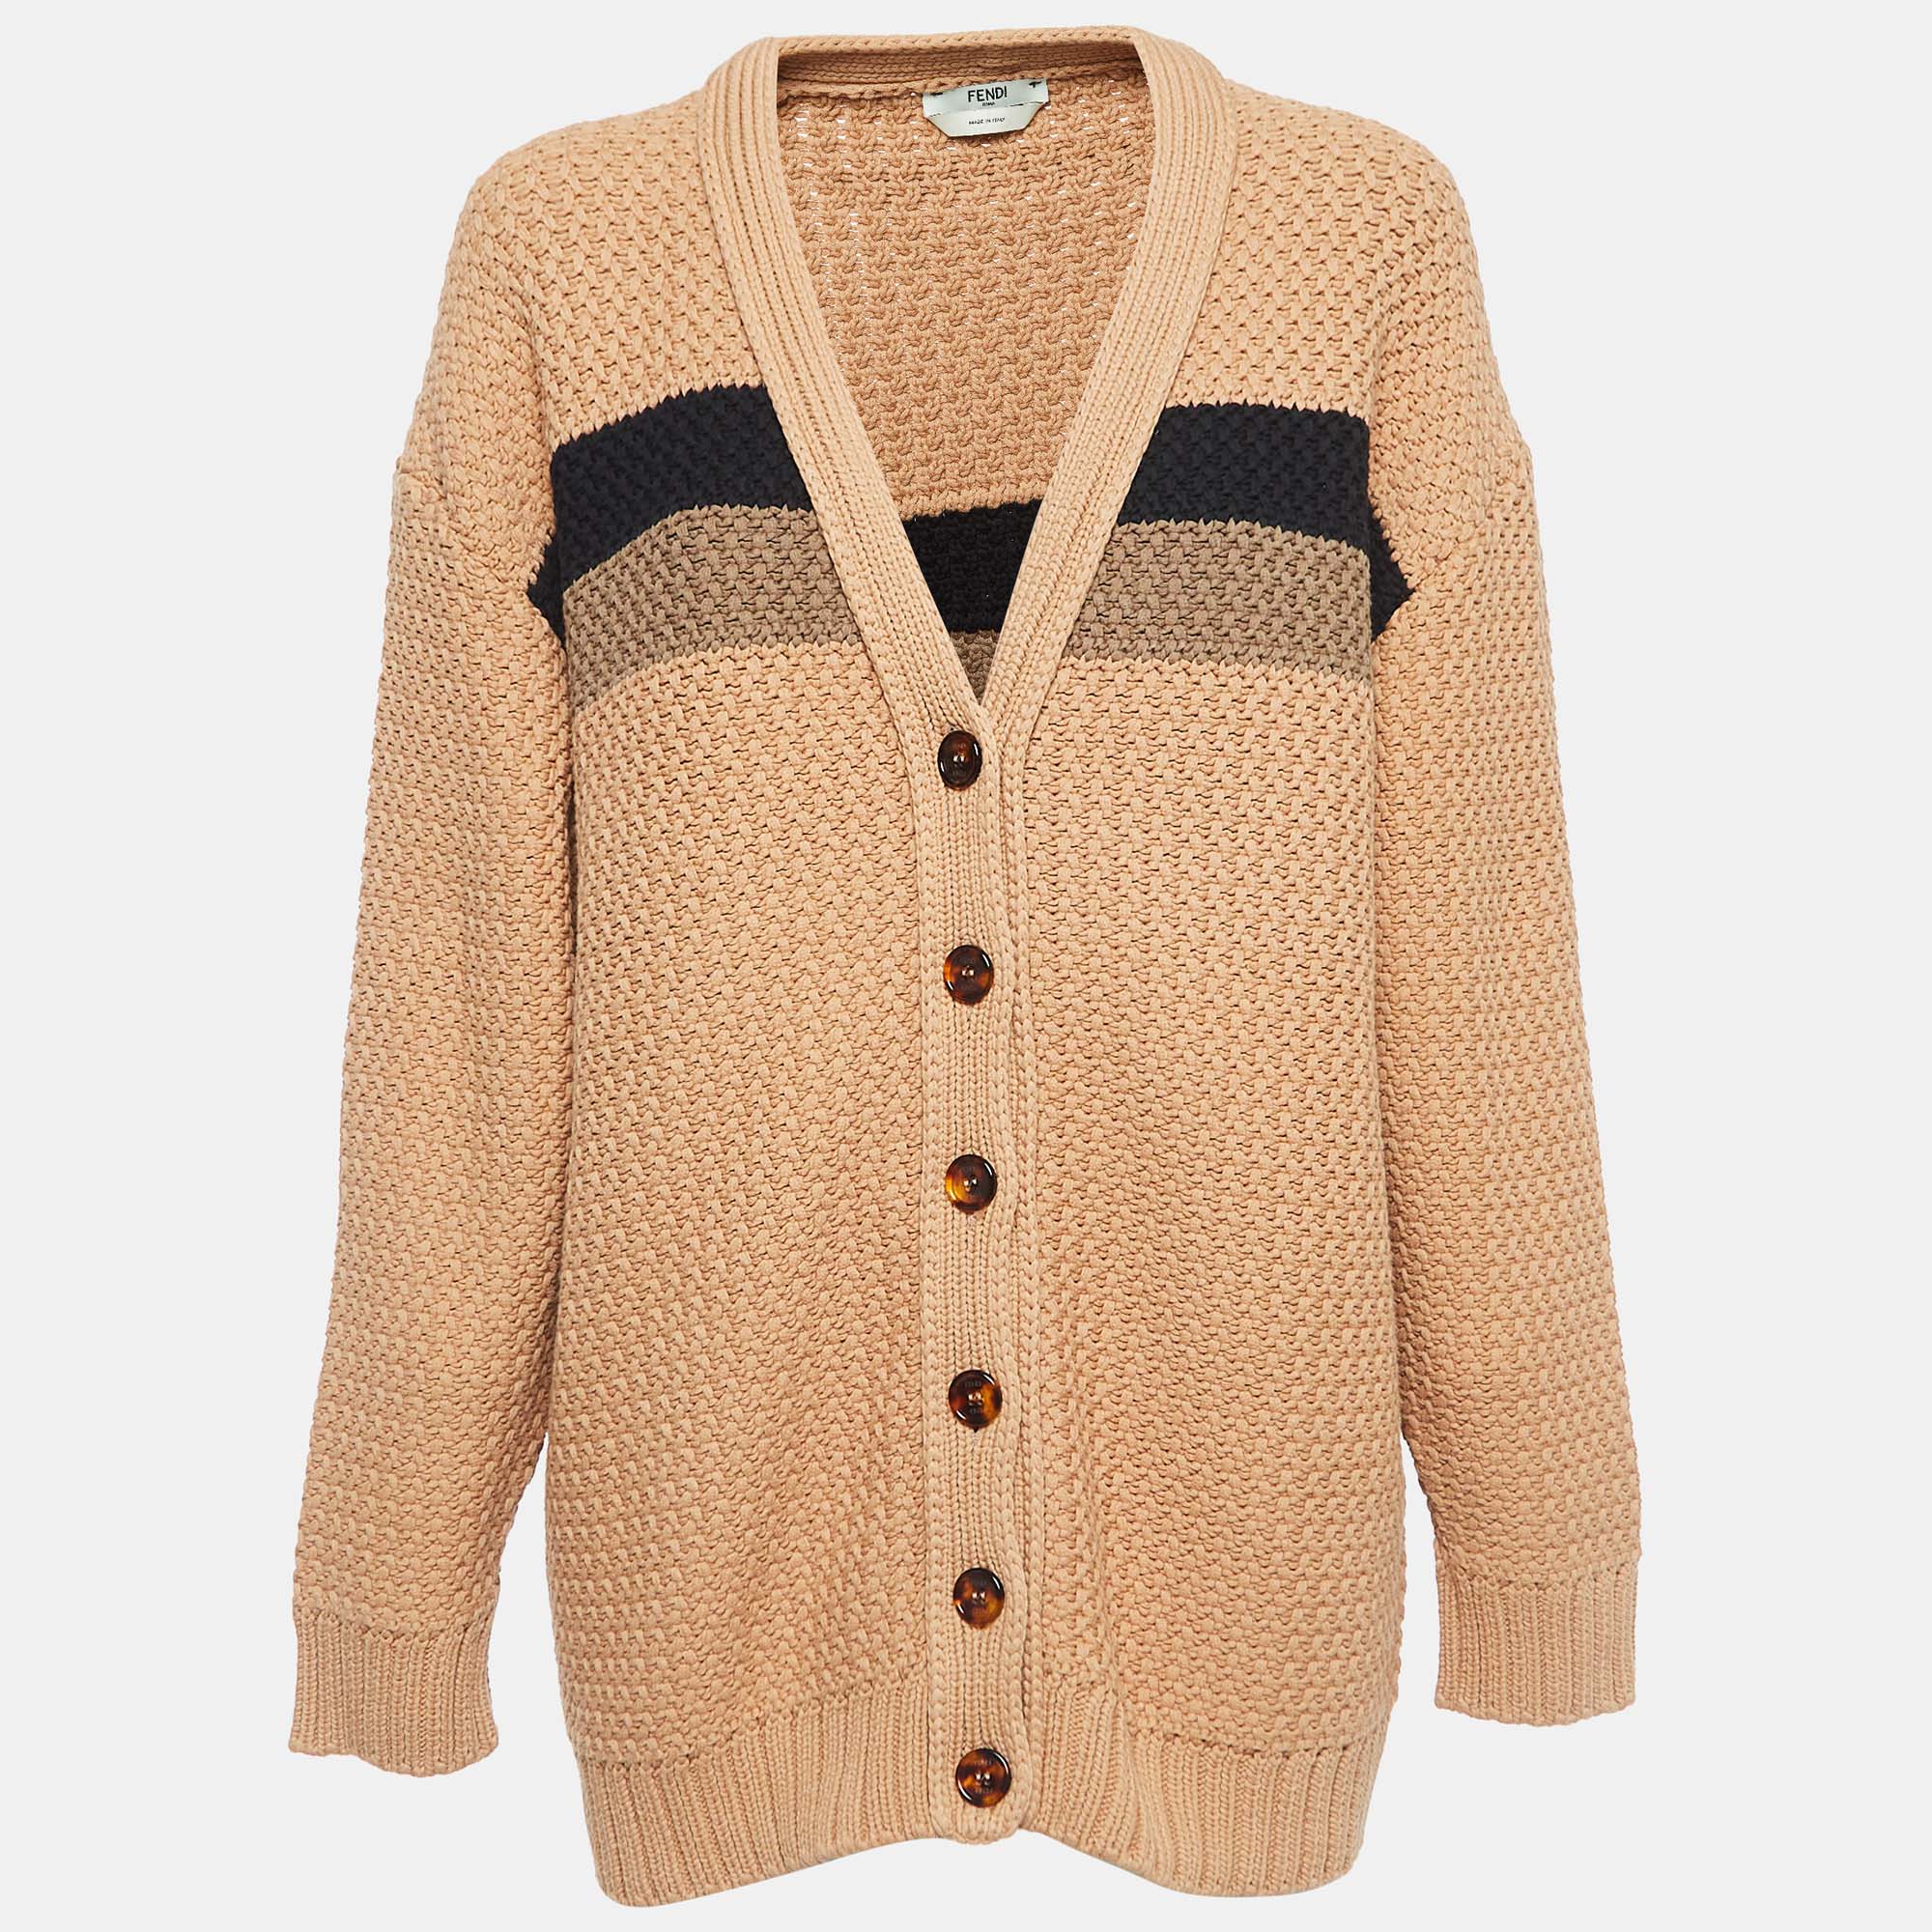 Fendi Light Brown Striped Knit Buttoned Cardigan S